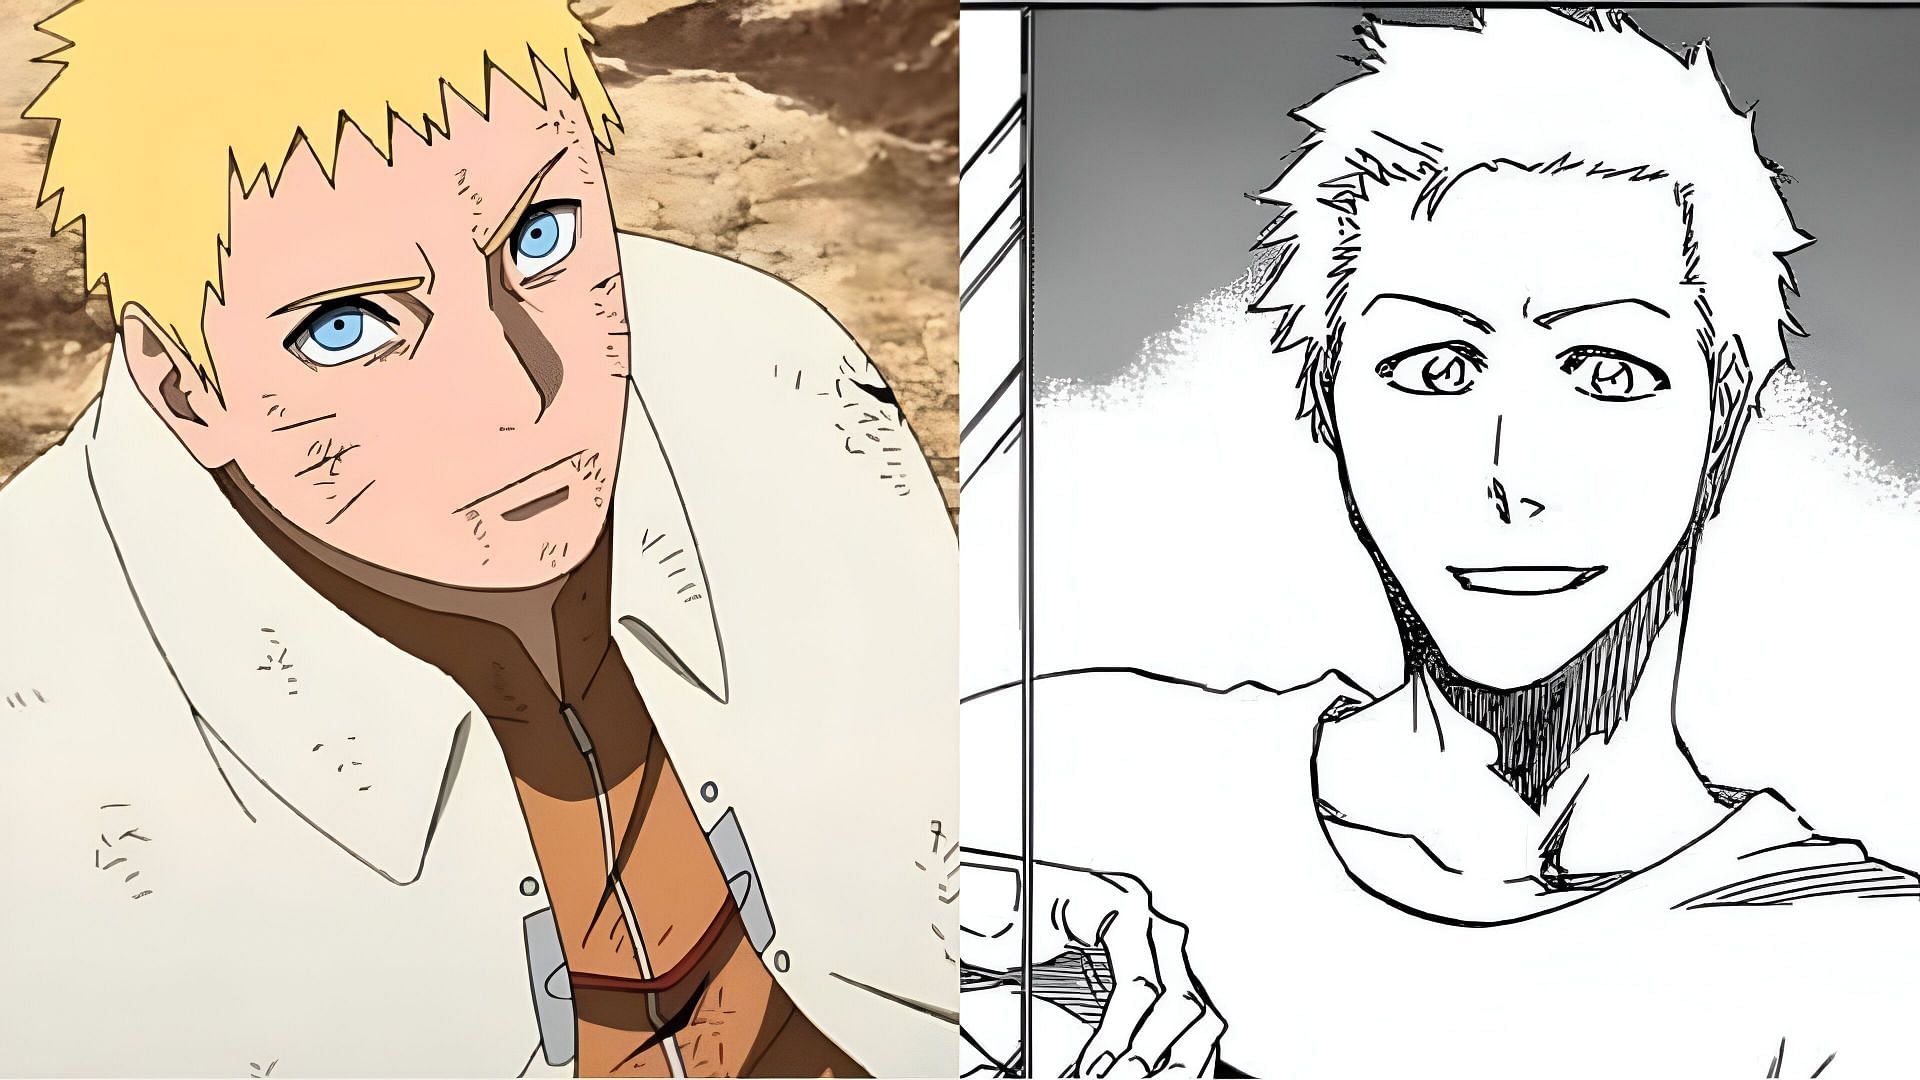 Naruto (left) and Ichigo (right) (Image via Studio Pierrot and Shueisha)